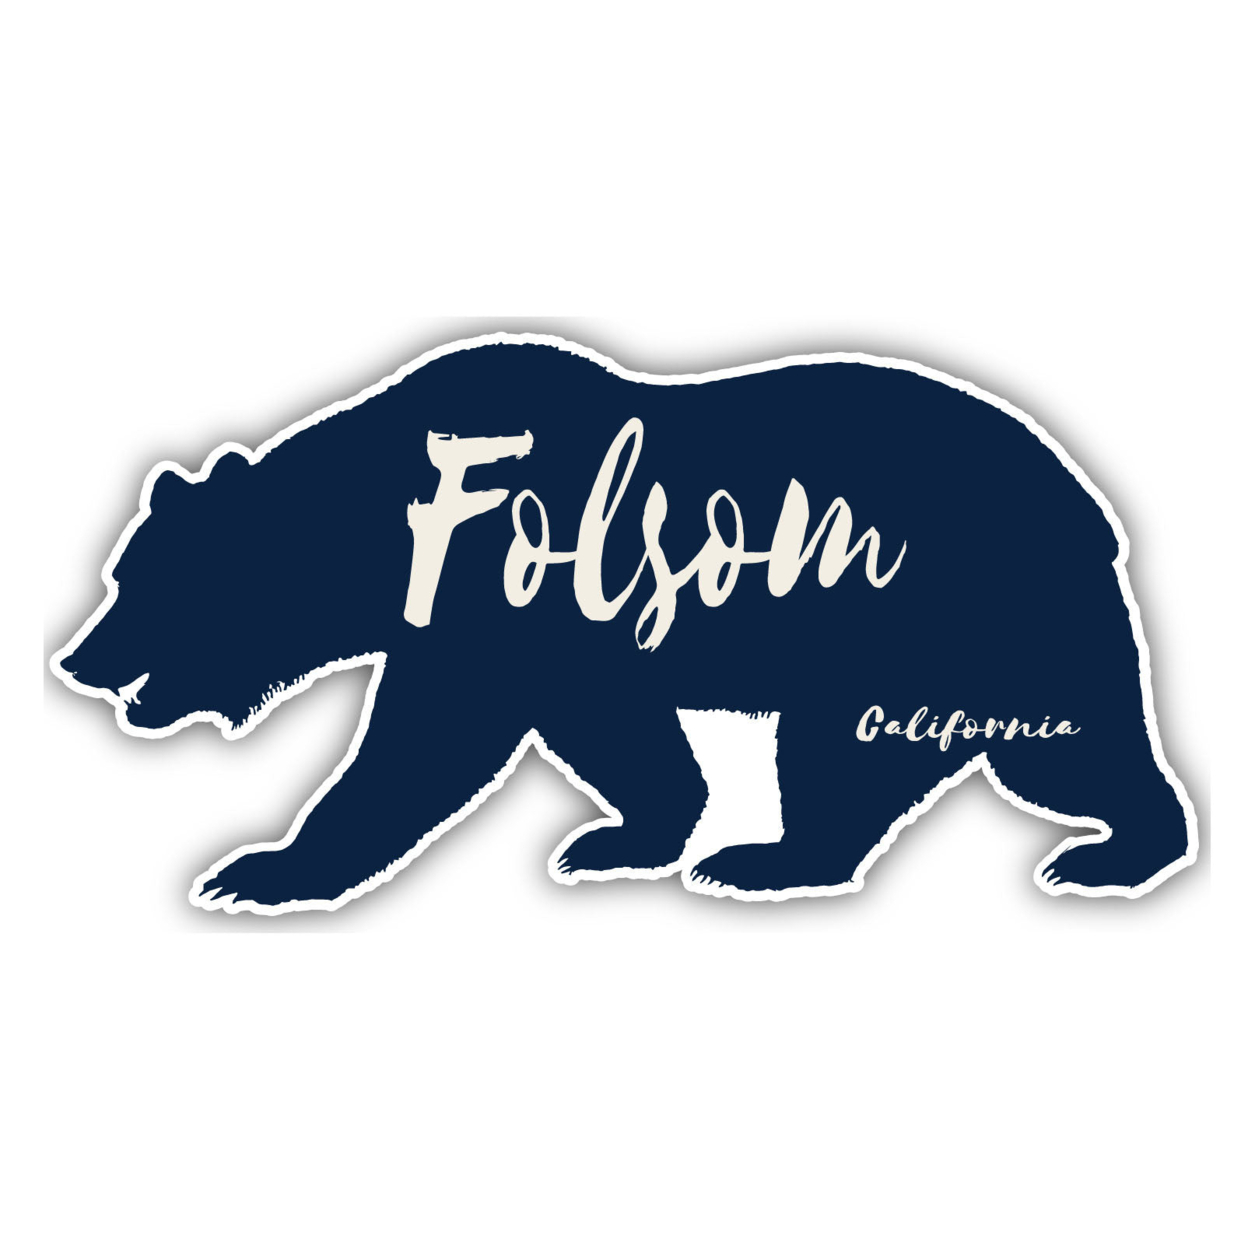 Folsom California Souvenir Decorative Stickers (Choose Theme And Size) - Single Unit, 8-Inch, Bear